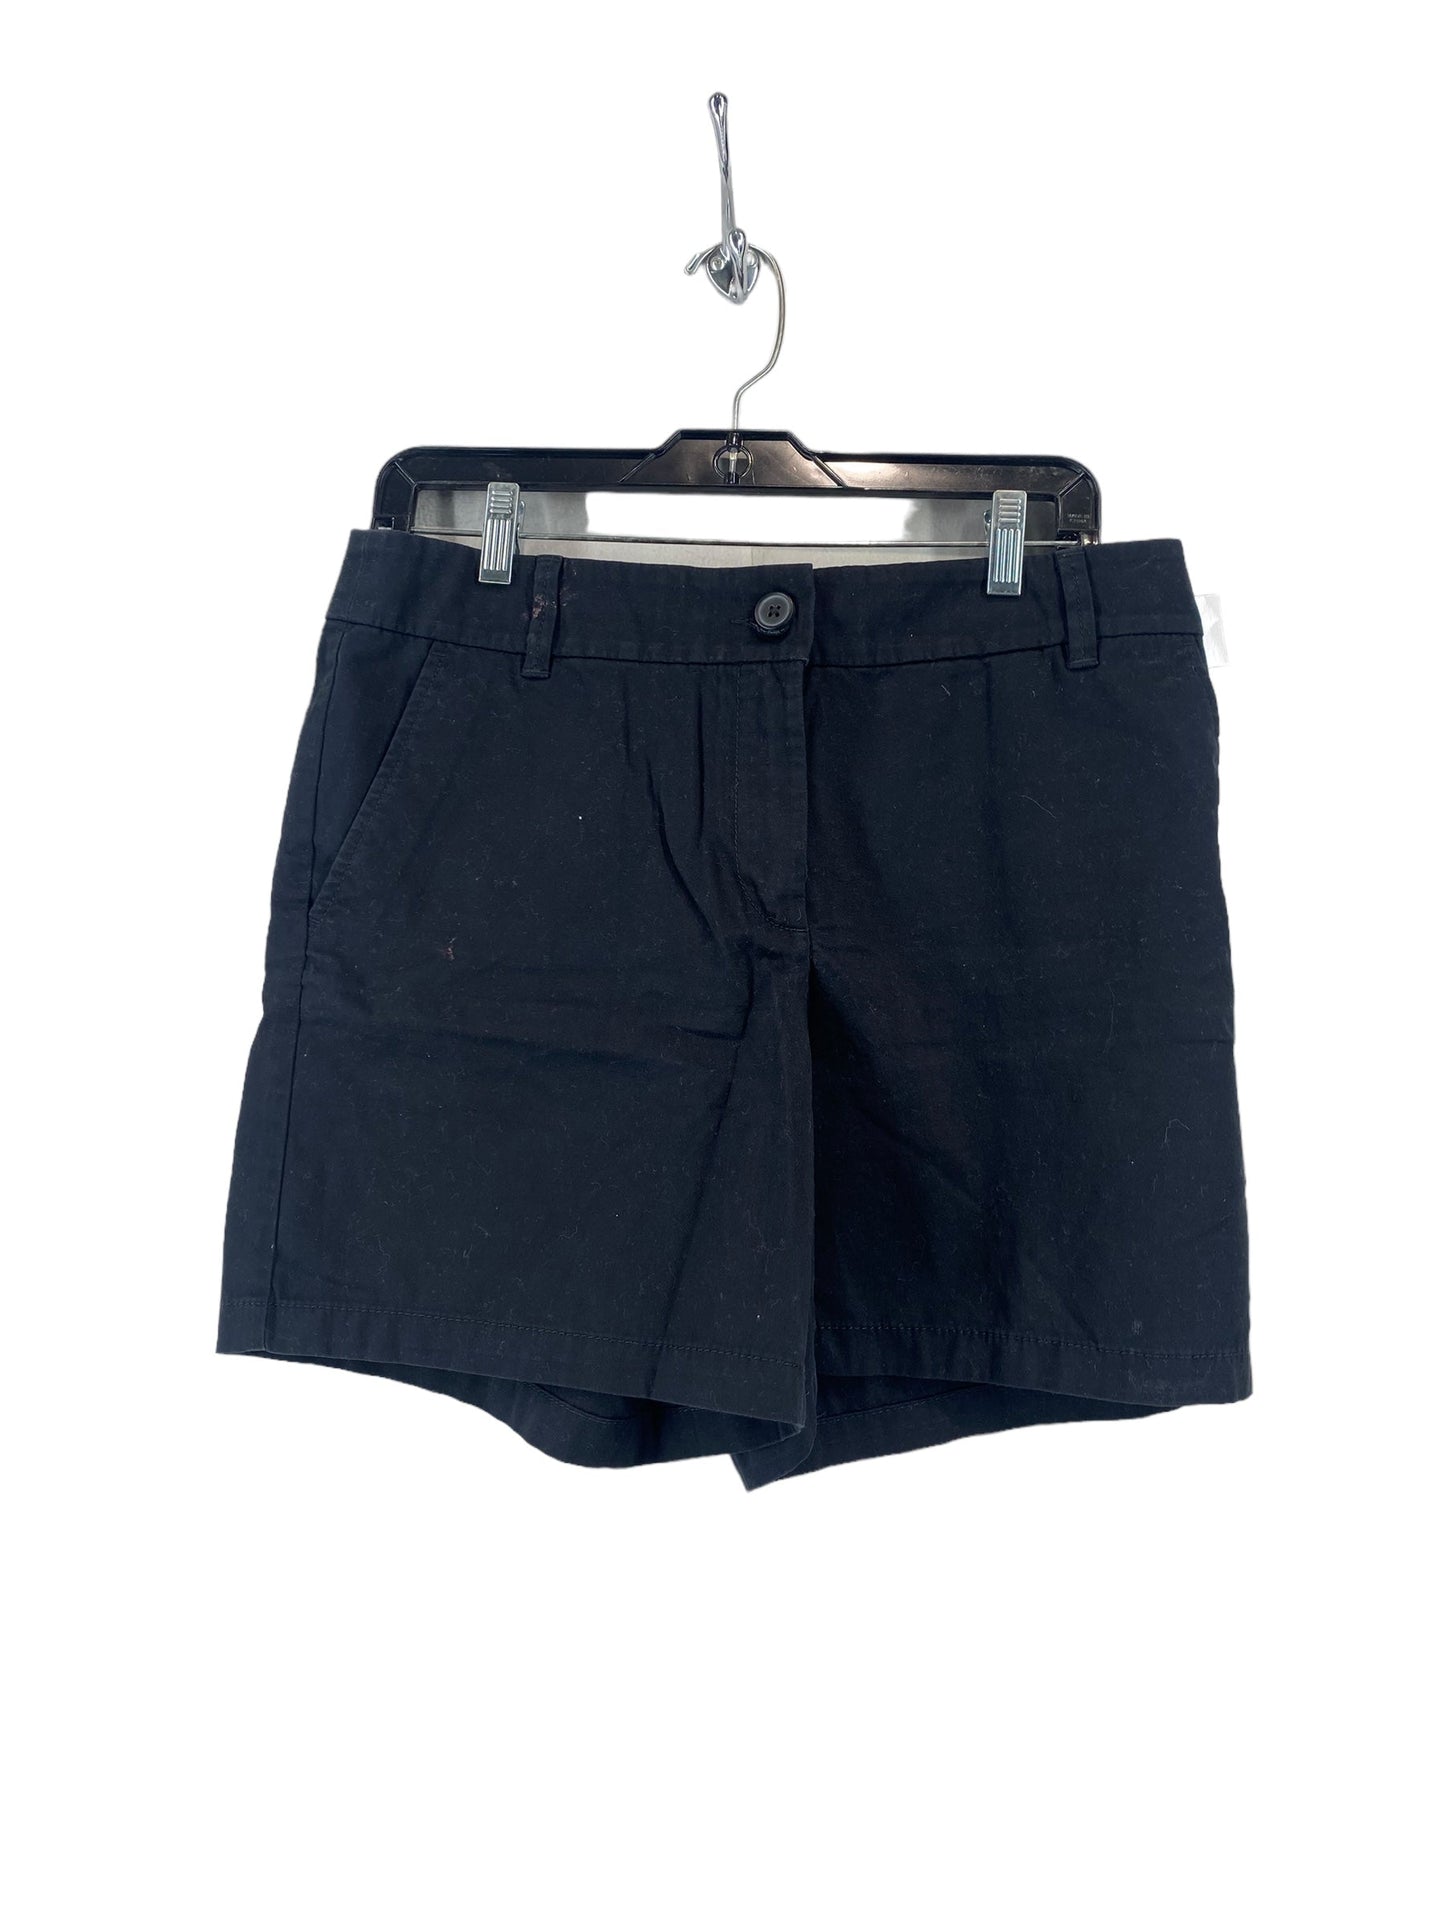 Black Shorts Loft, Size 10